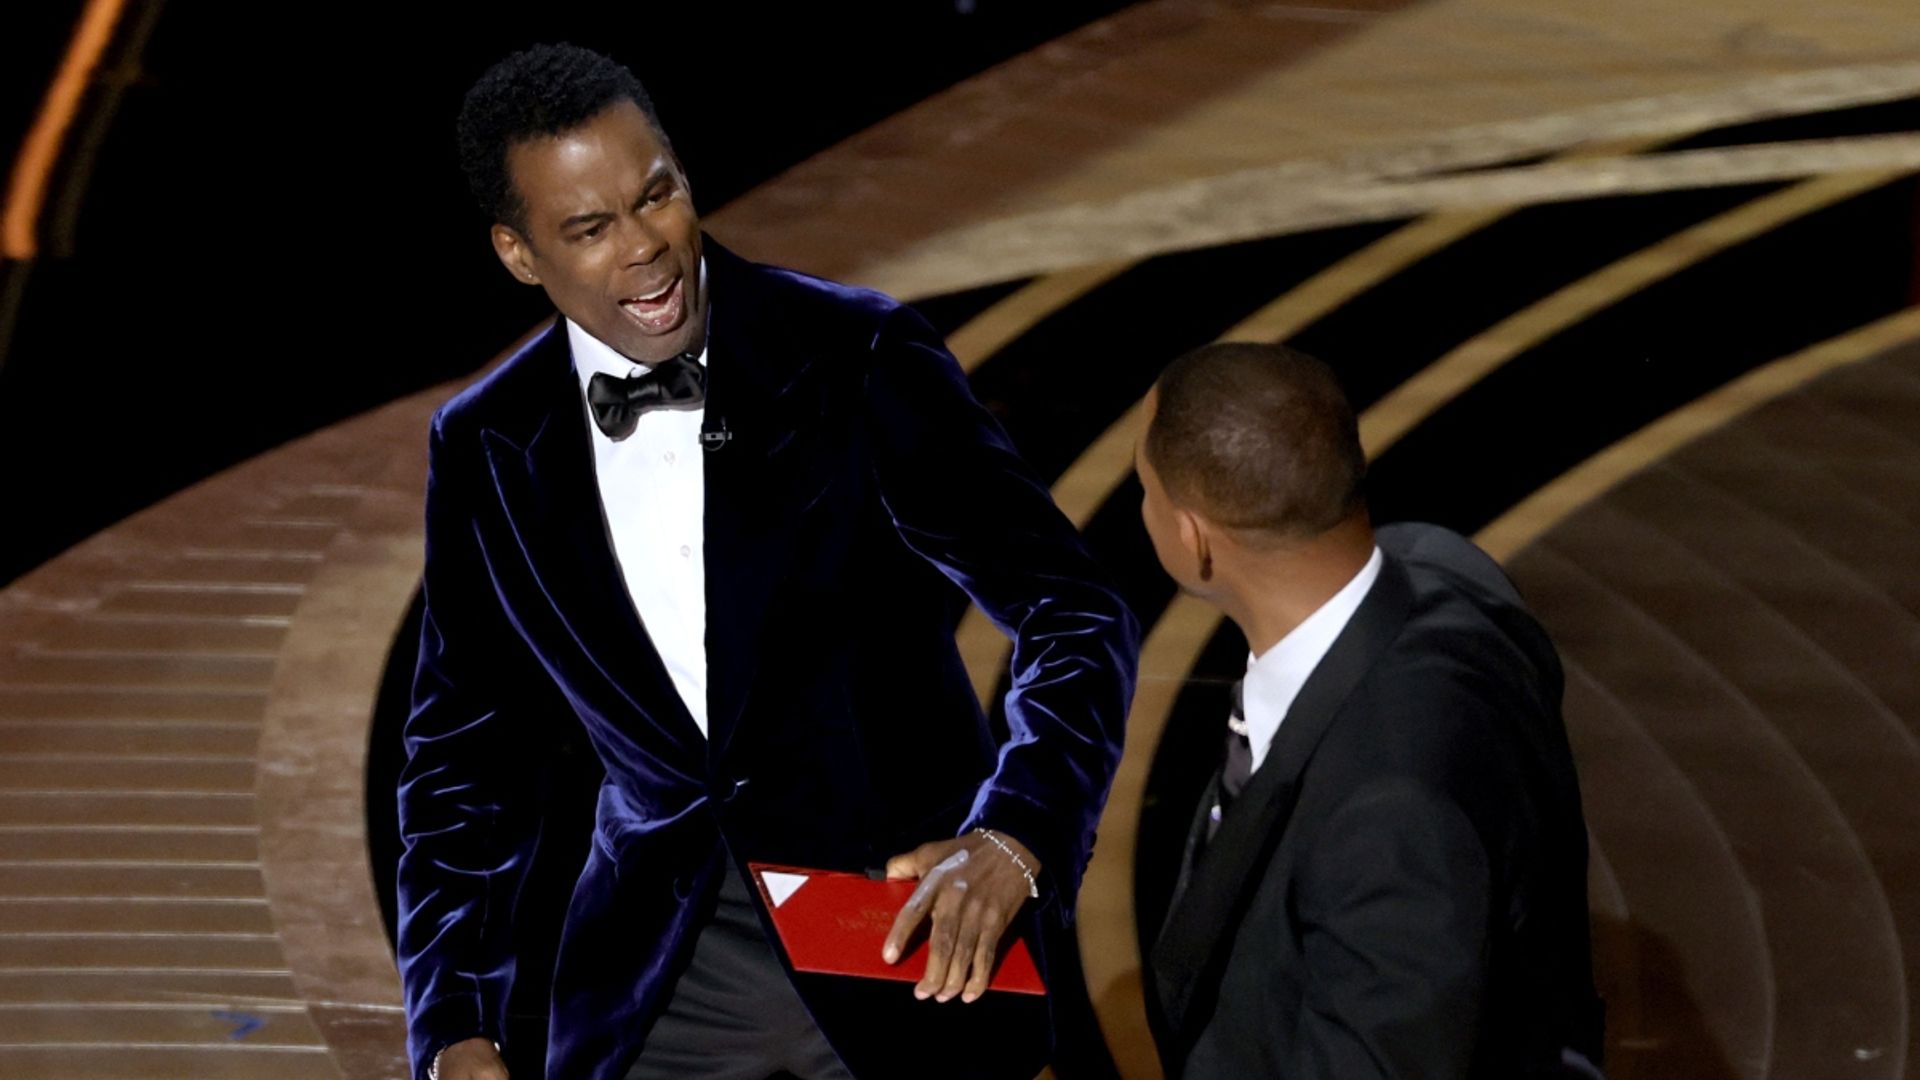 Will Smith slaps Chris Rock in shocking Oscars moment following joke about Jada Pinkett Smith